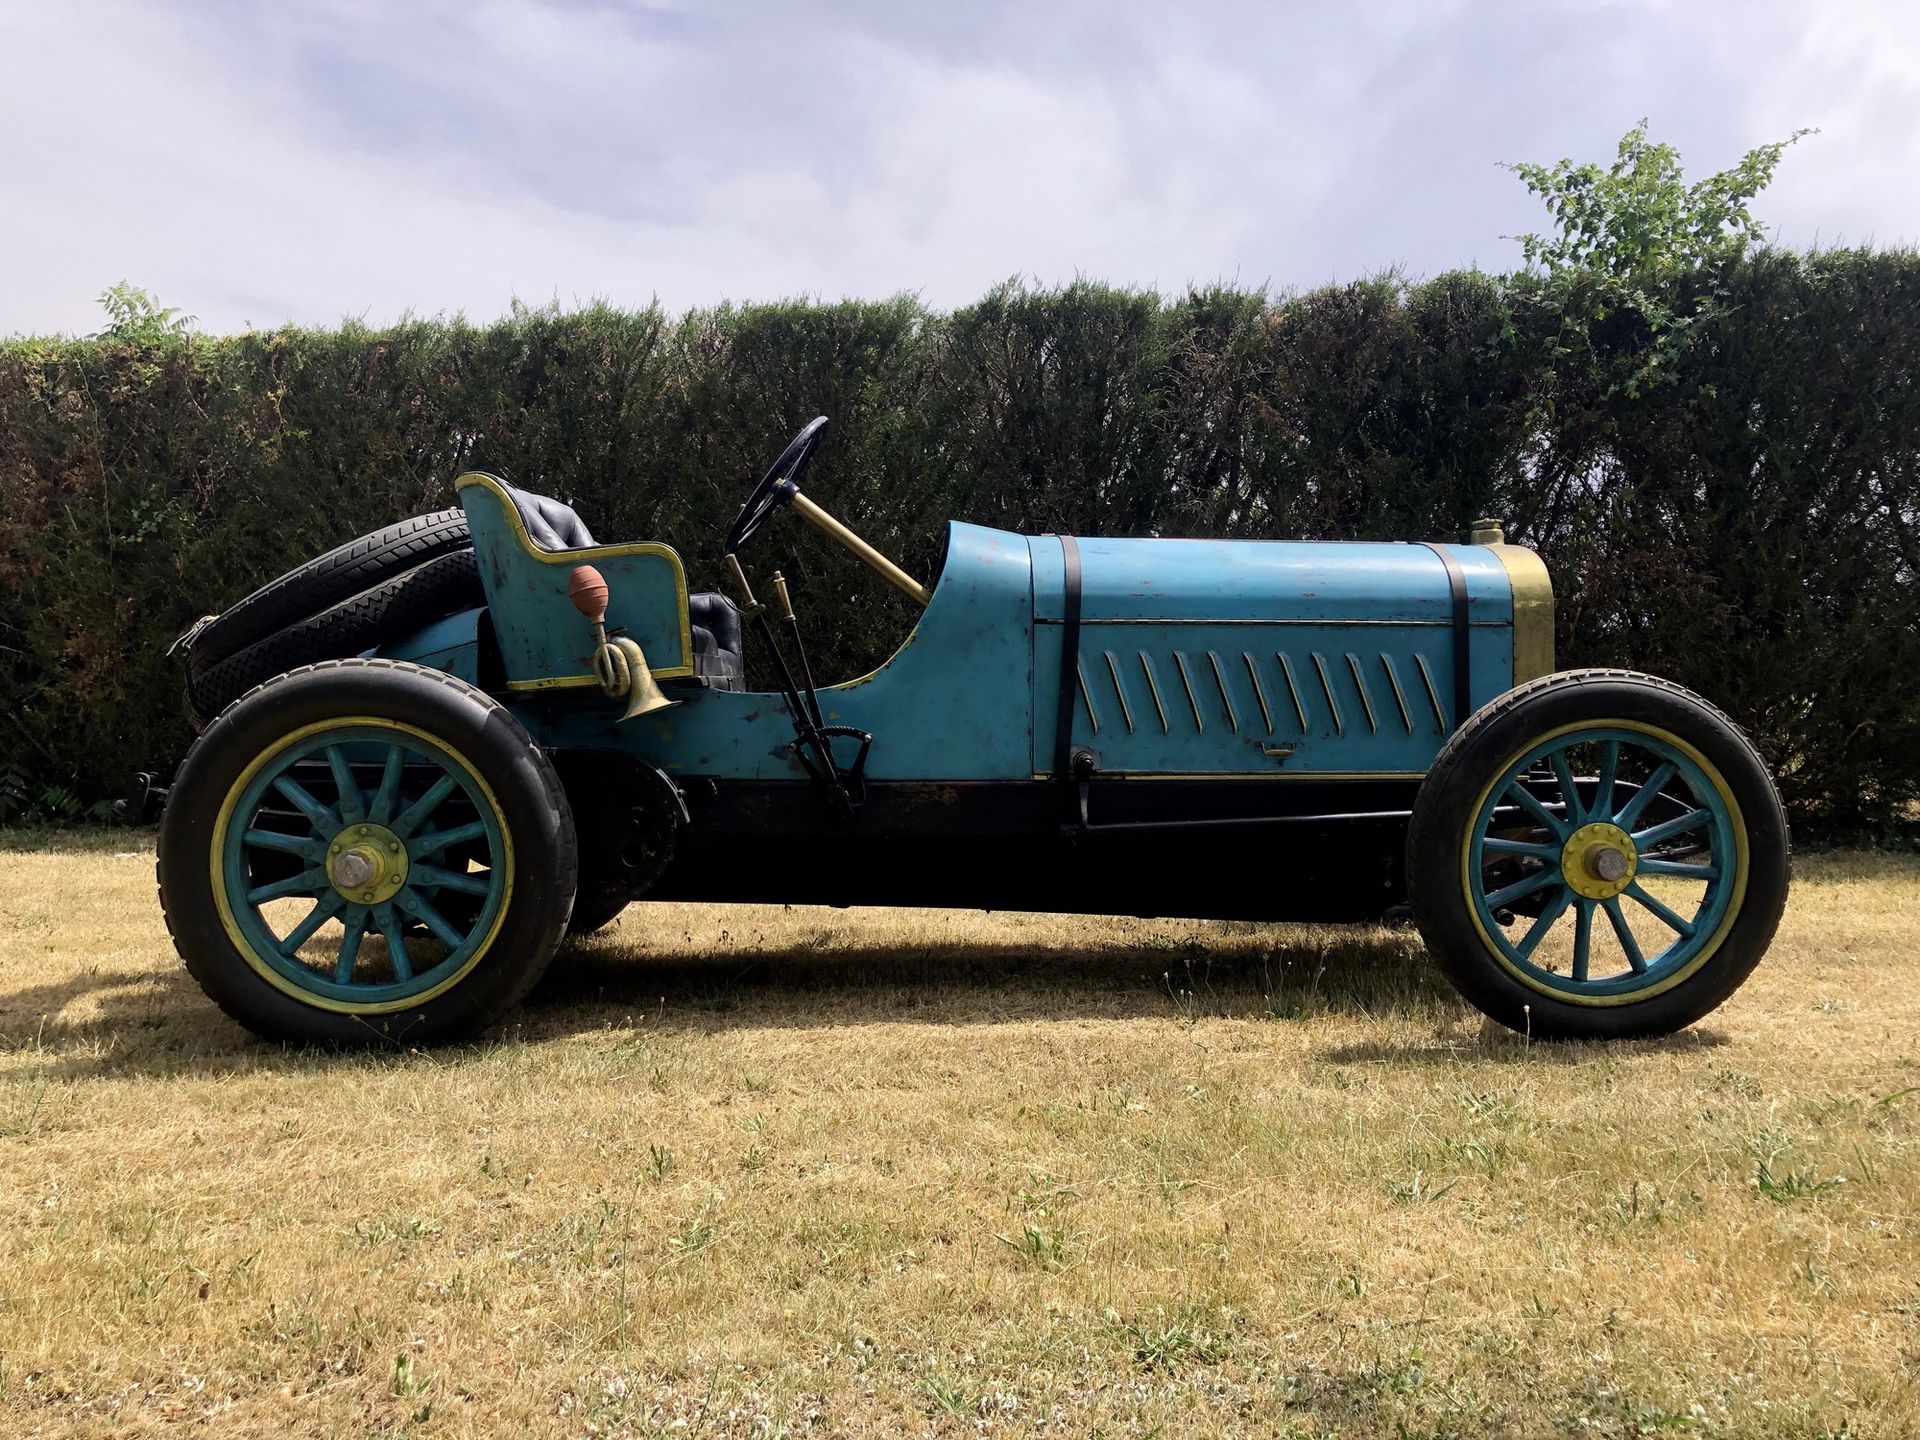 1906 DEXTER SPORT BIPLACE 1906年德克斯特运动型双座车

建造了2个例子

可能是最后一个仍然可见的

车轮上的汽车

法国收藏家的&hellip;